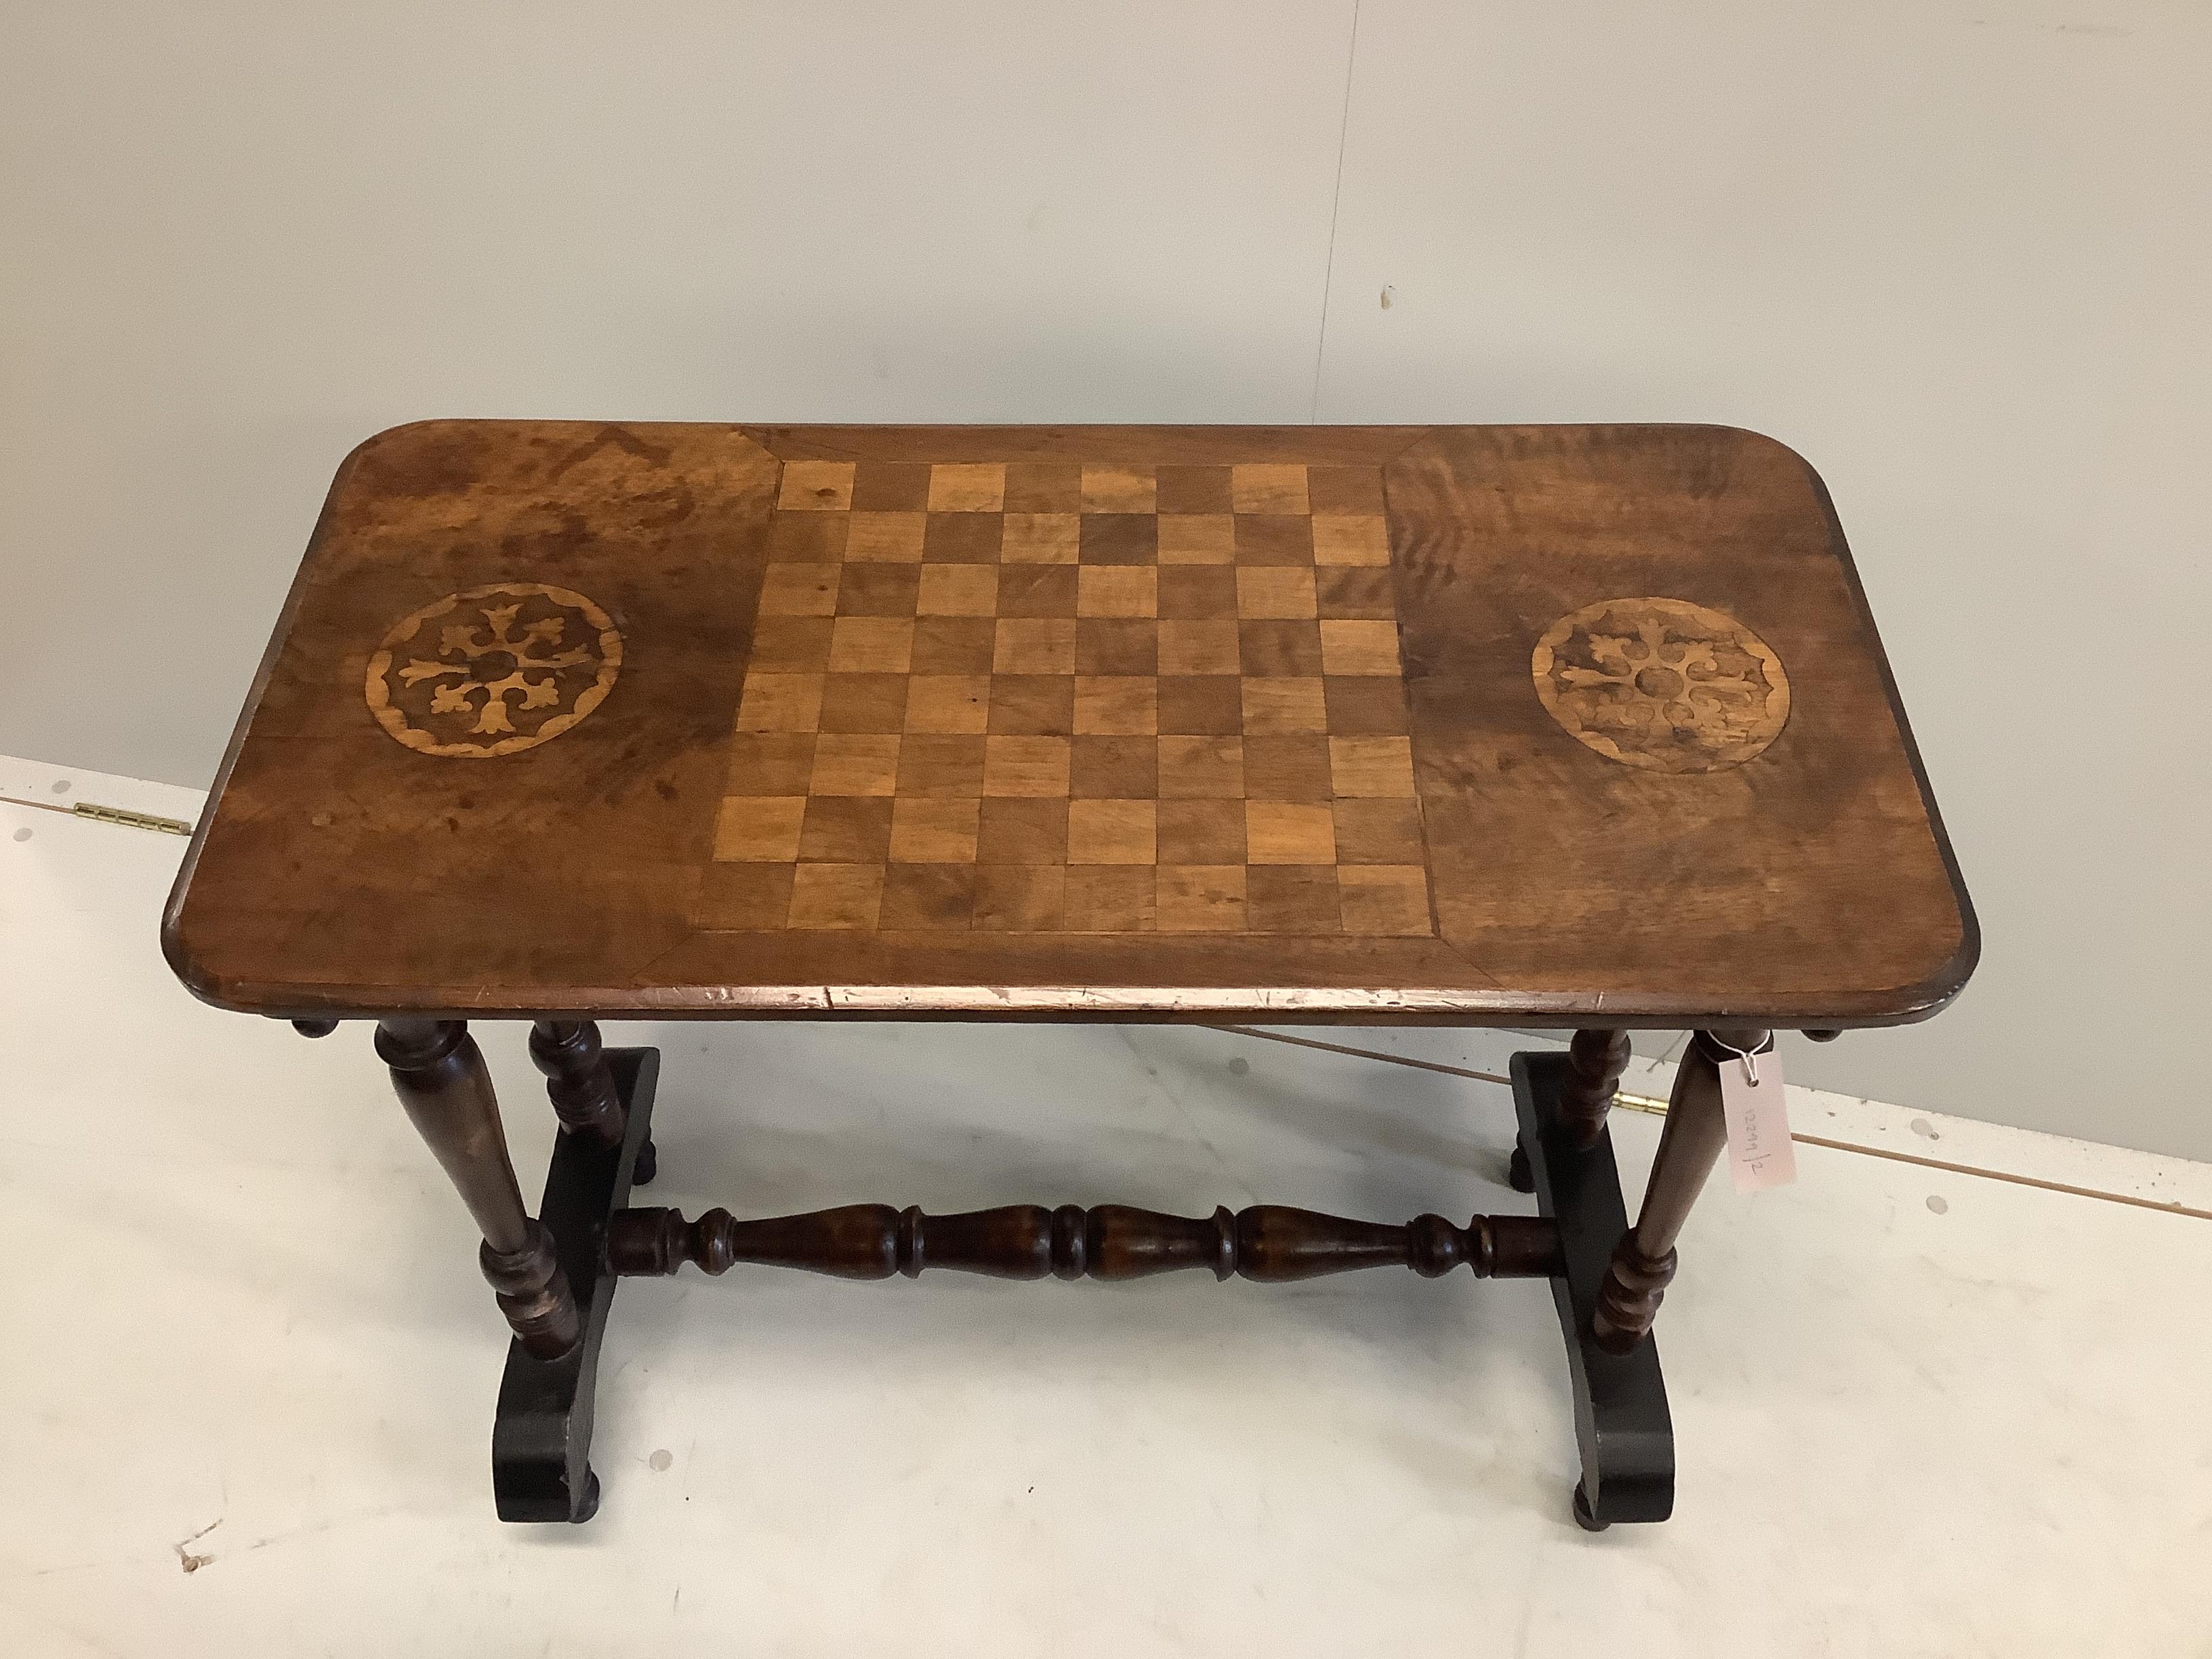 A Victorian rectangular walnut games table, width 78cm, depth 39cm, height 68cm